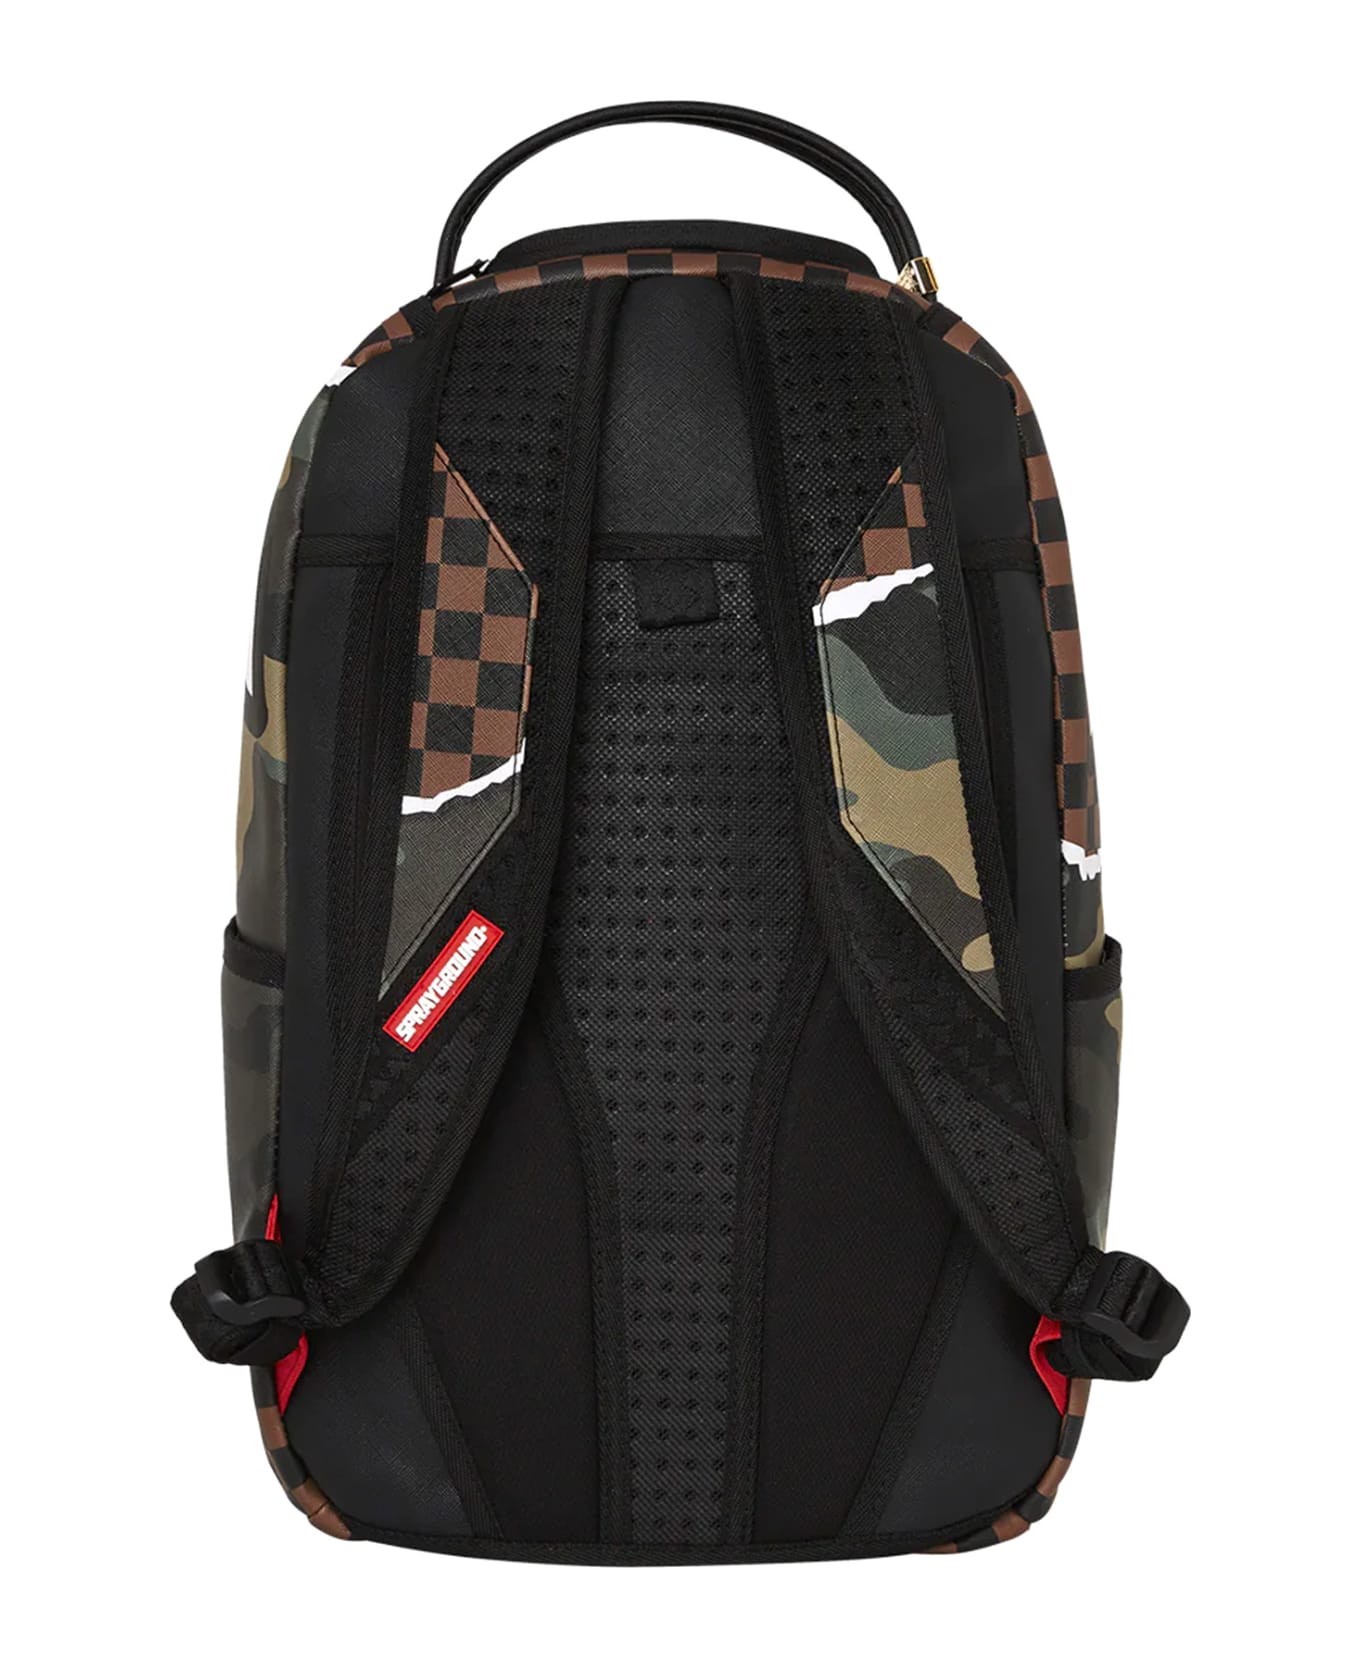 Sprayground Backpack - Brown